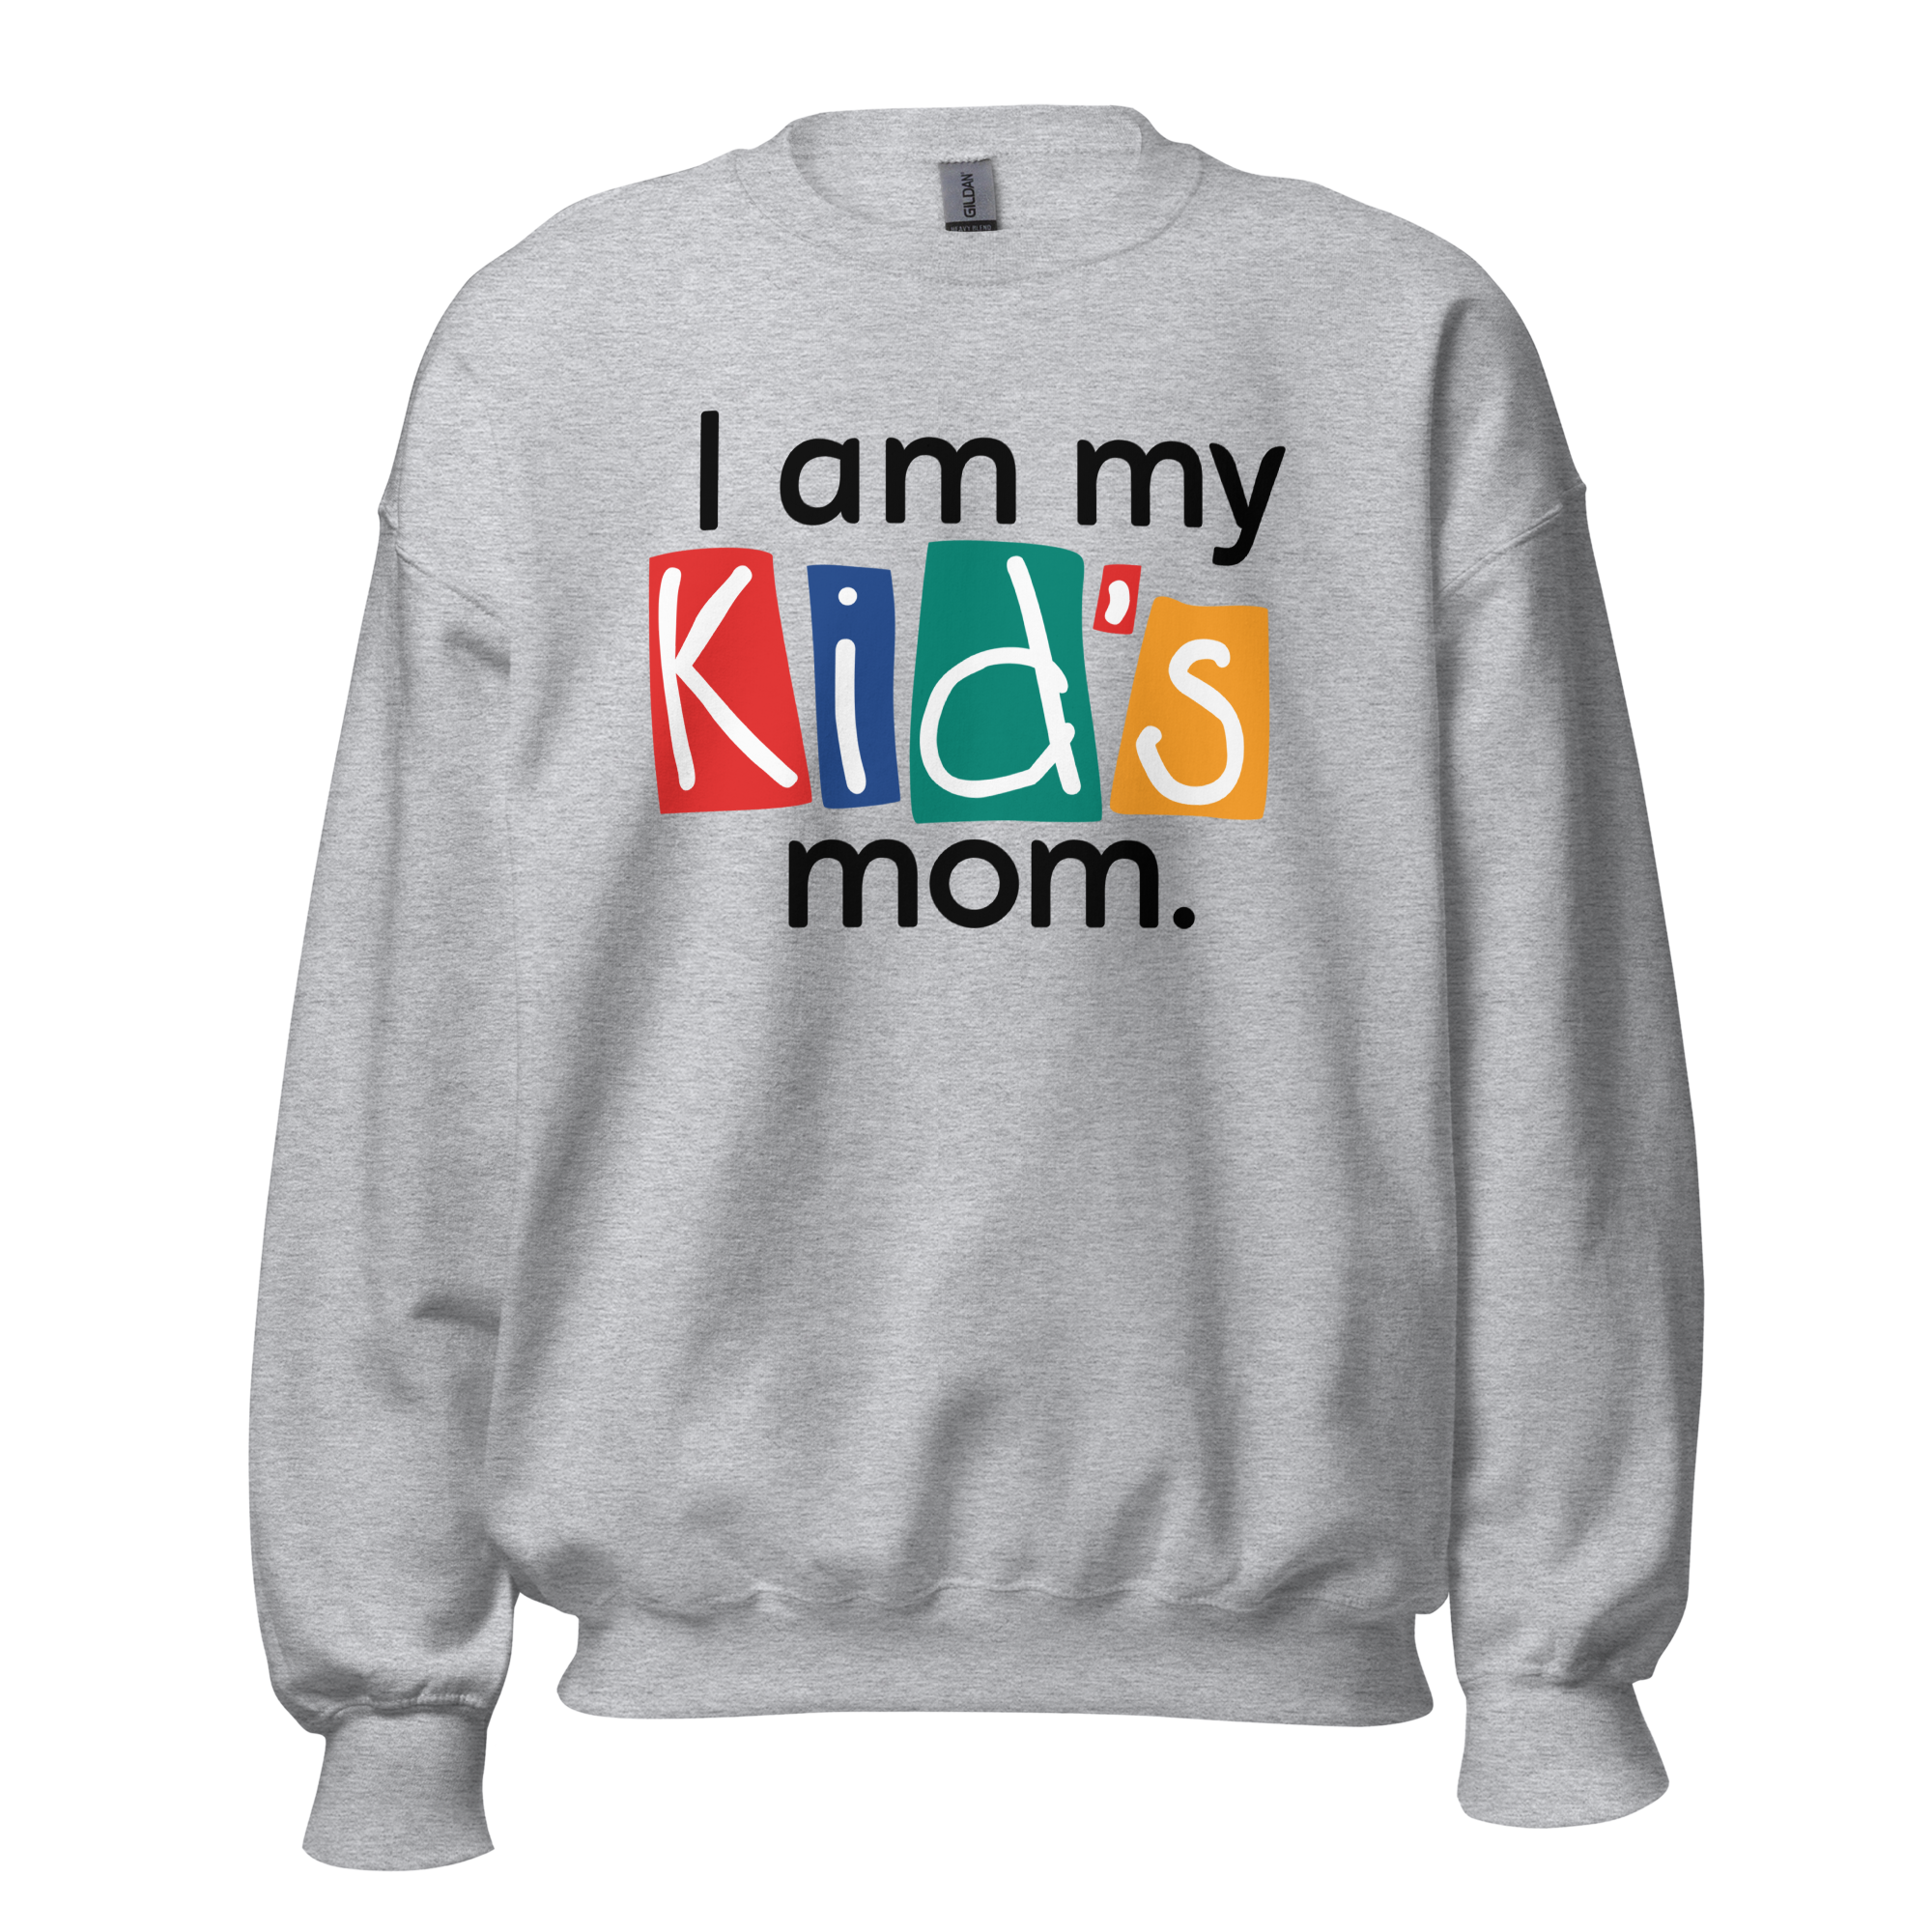 Dr. Laura: My Kid's Mom Sweatshirt